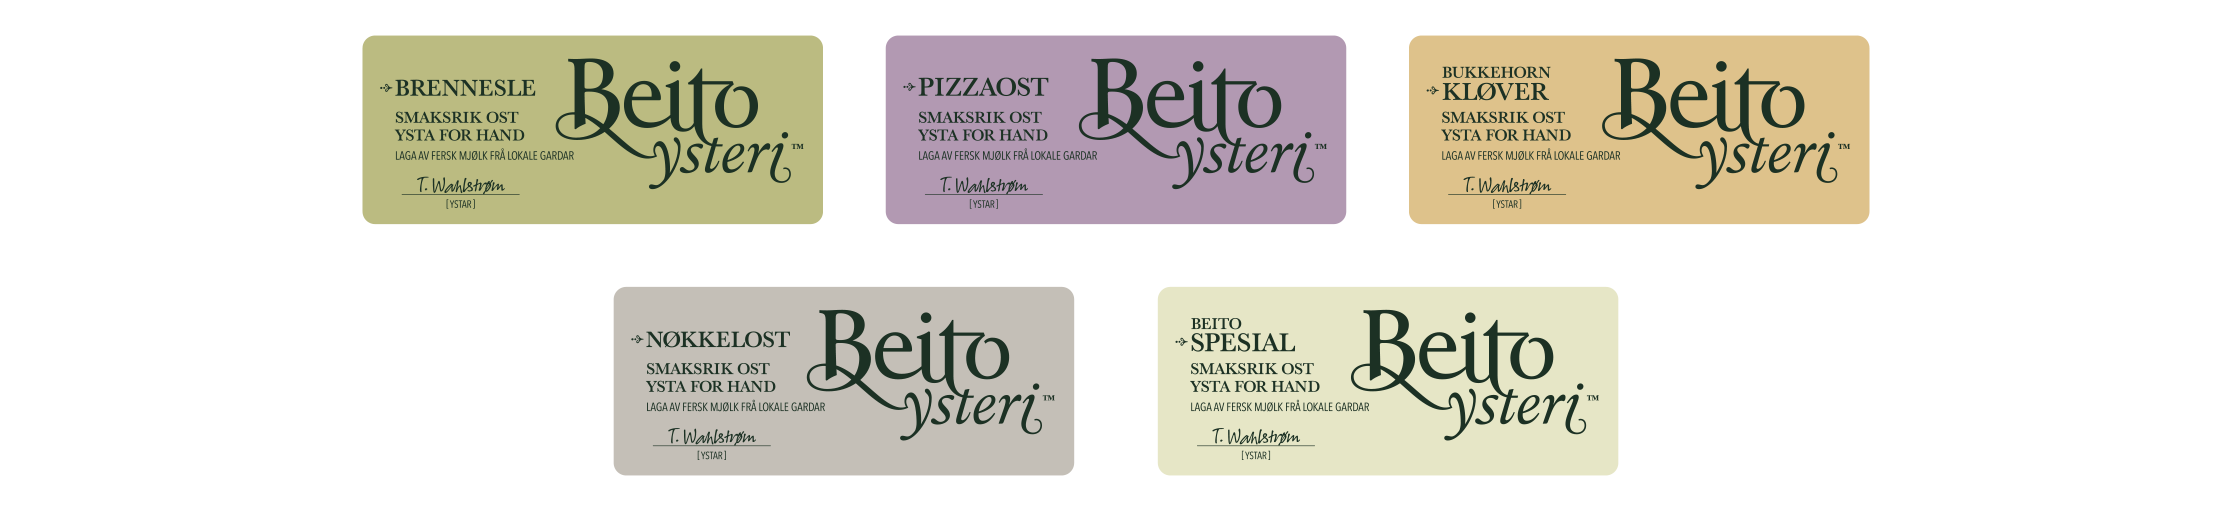 Beito Ysteri etiketter labels. Visuell identitet visual identity.